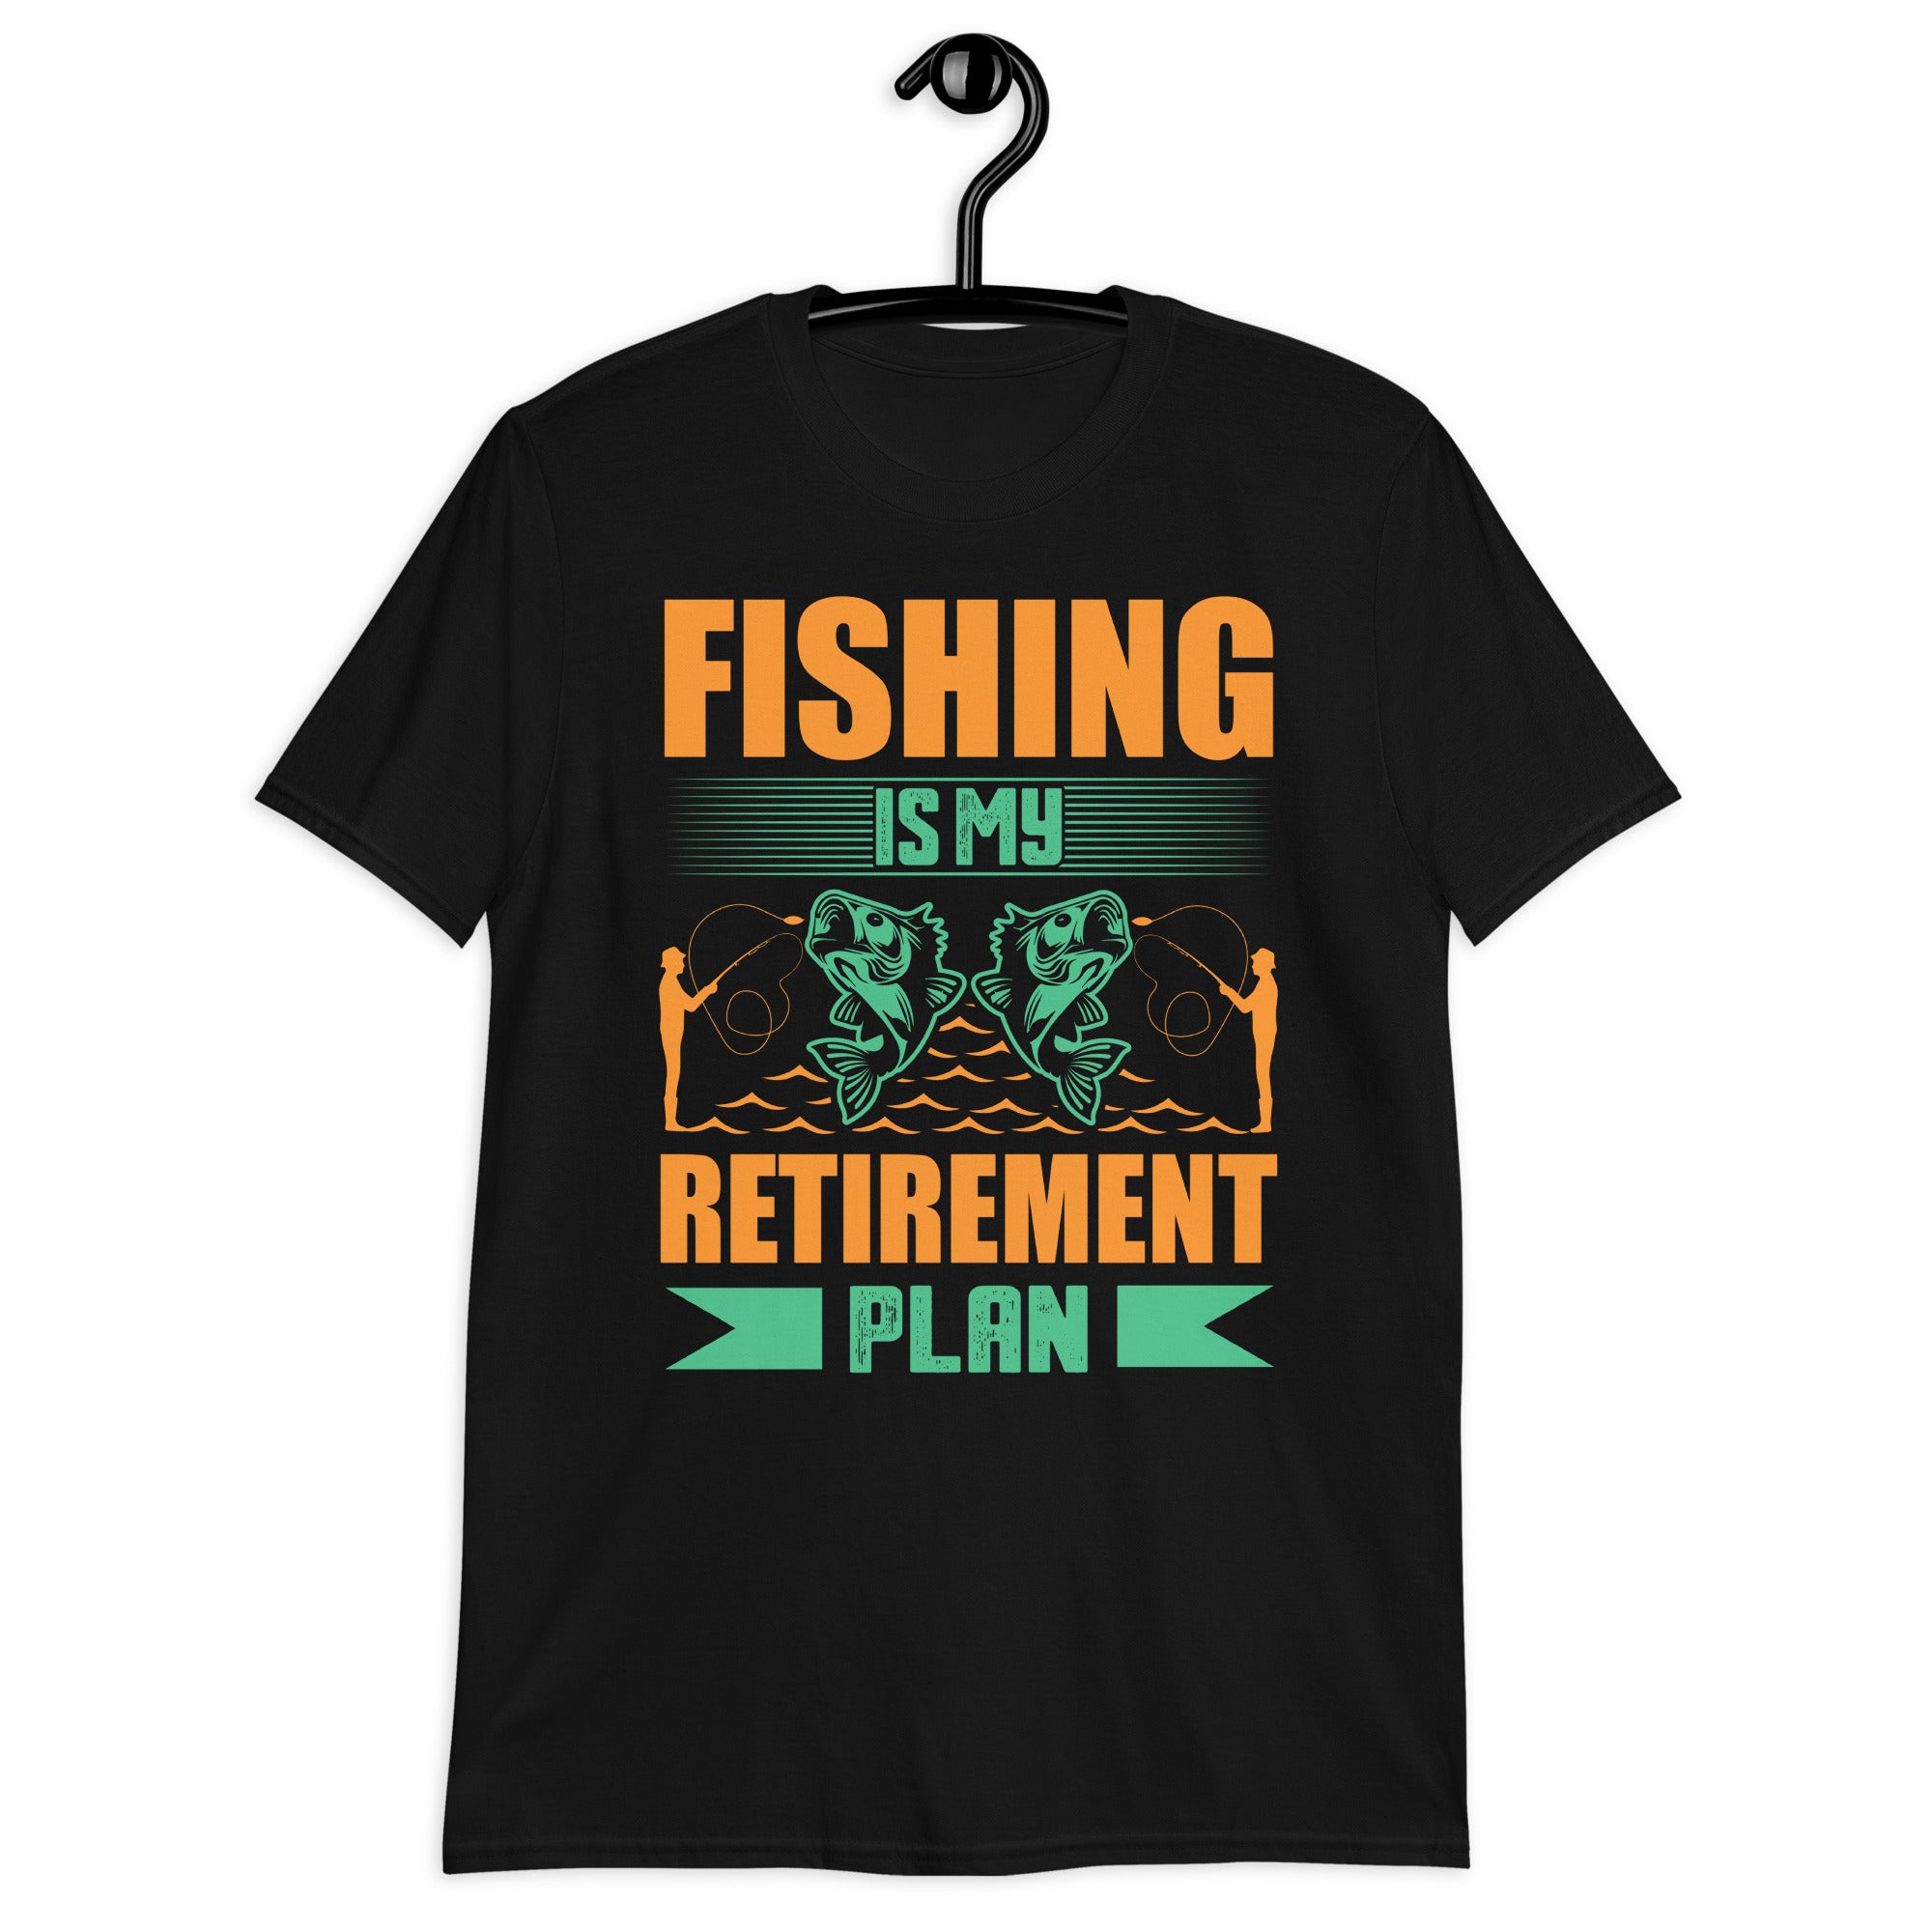 Fishing is my retirement plan Short-Sleeve Unisex T-Shirt